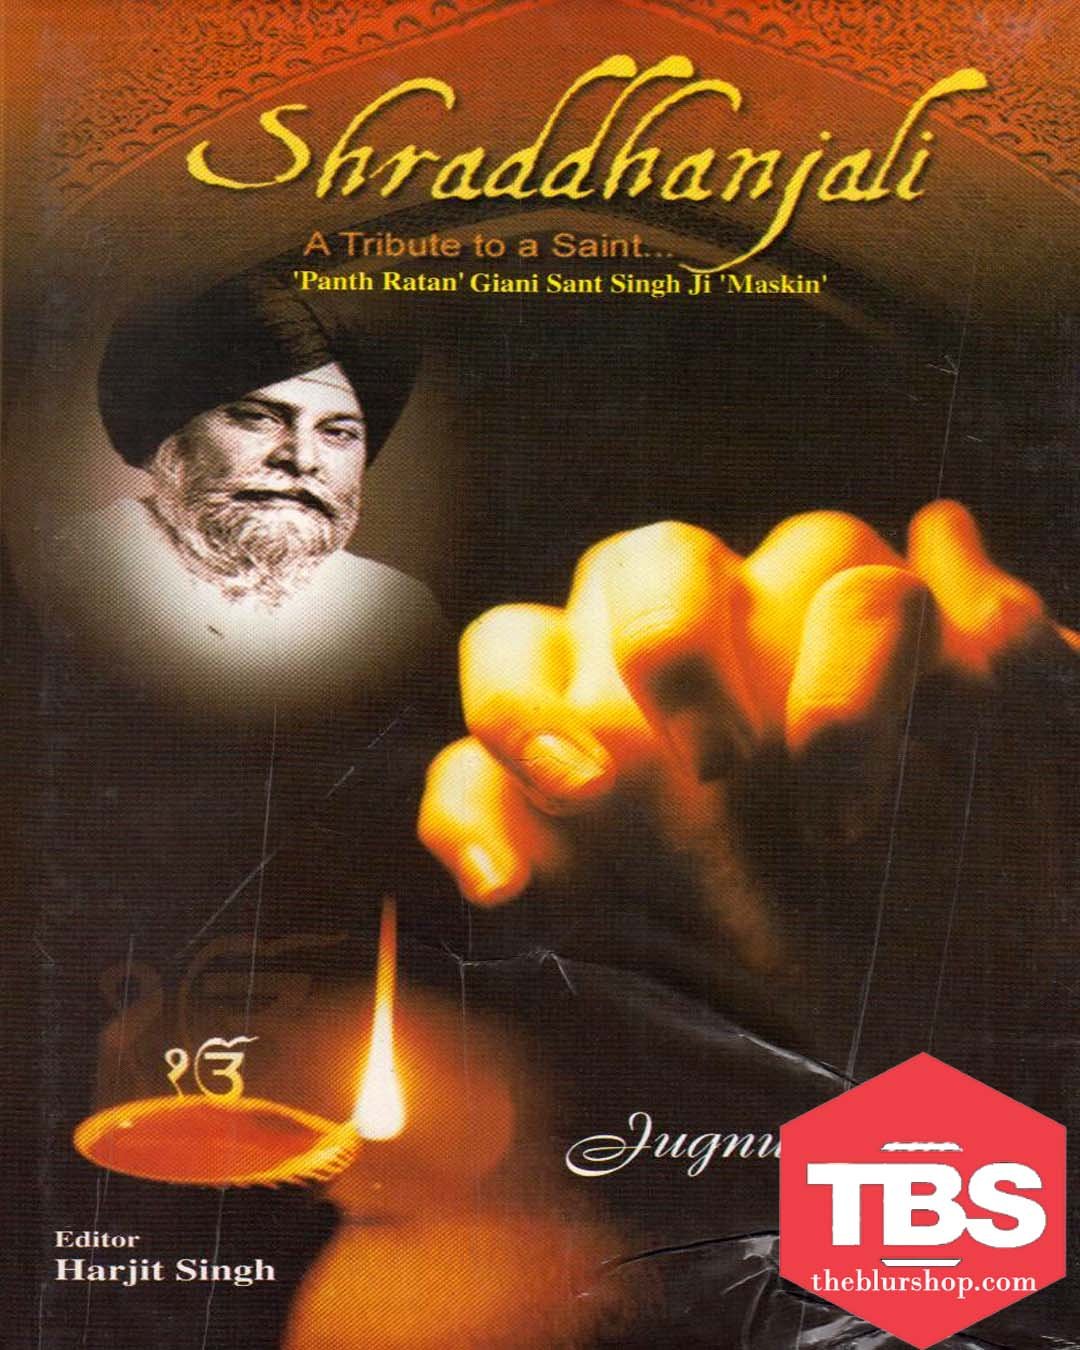 Shraddhanjali